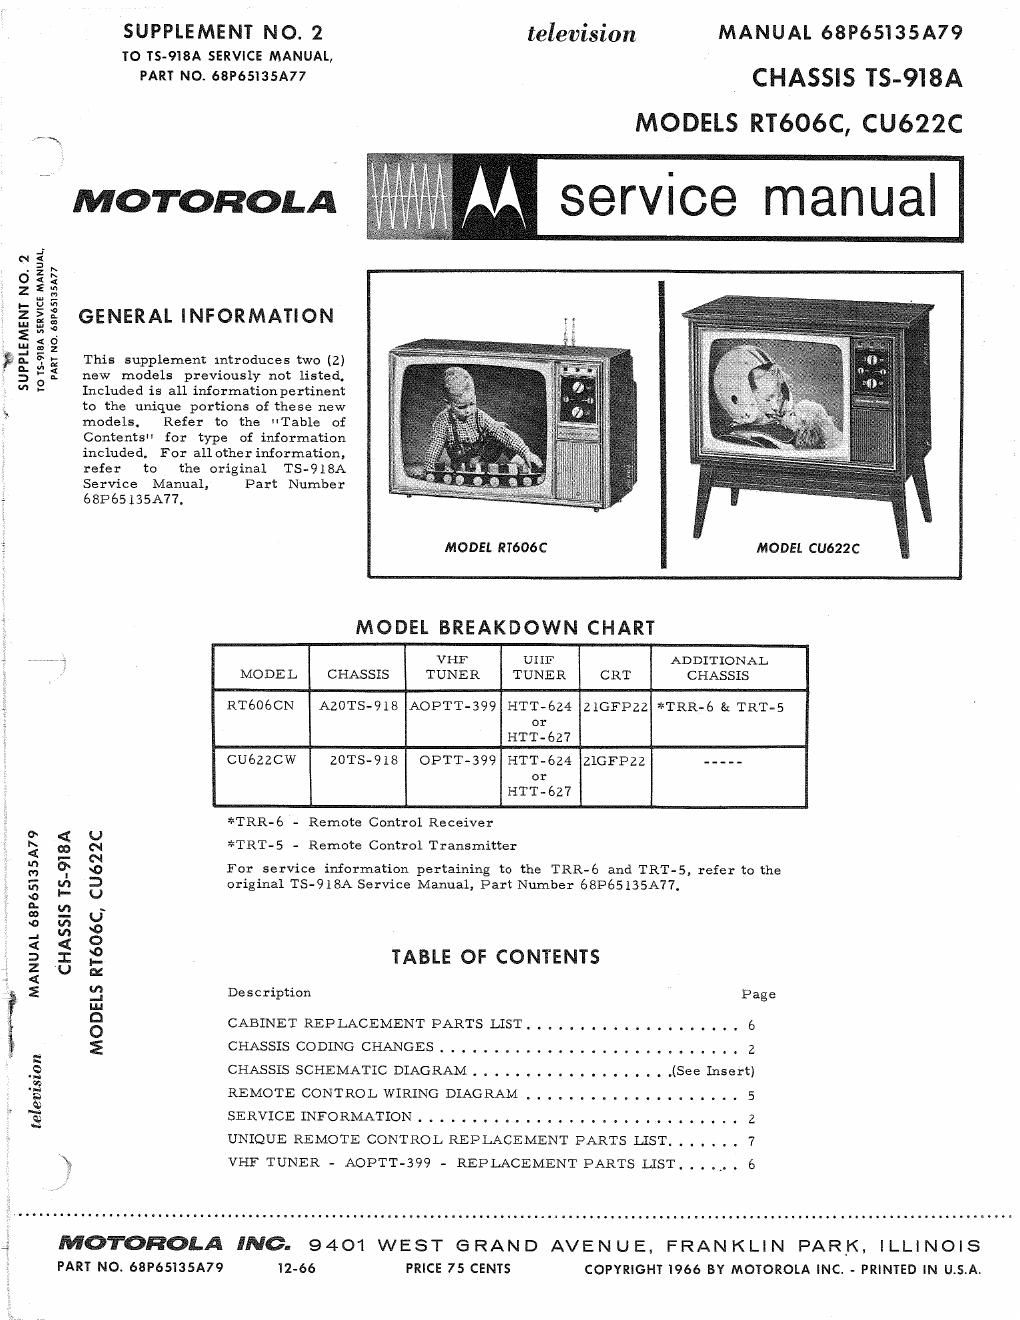 motorola rt 606 c service manual